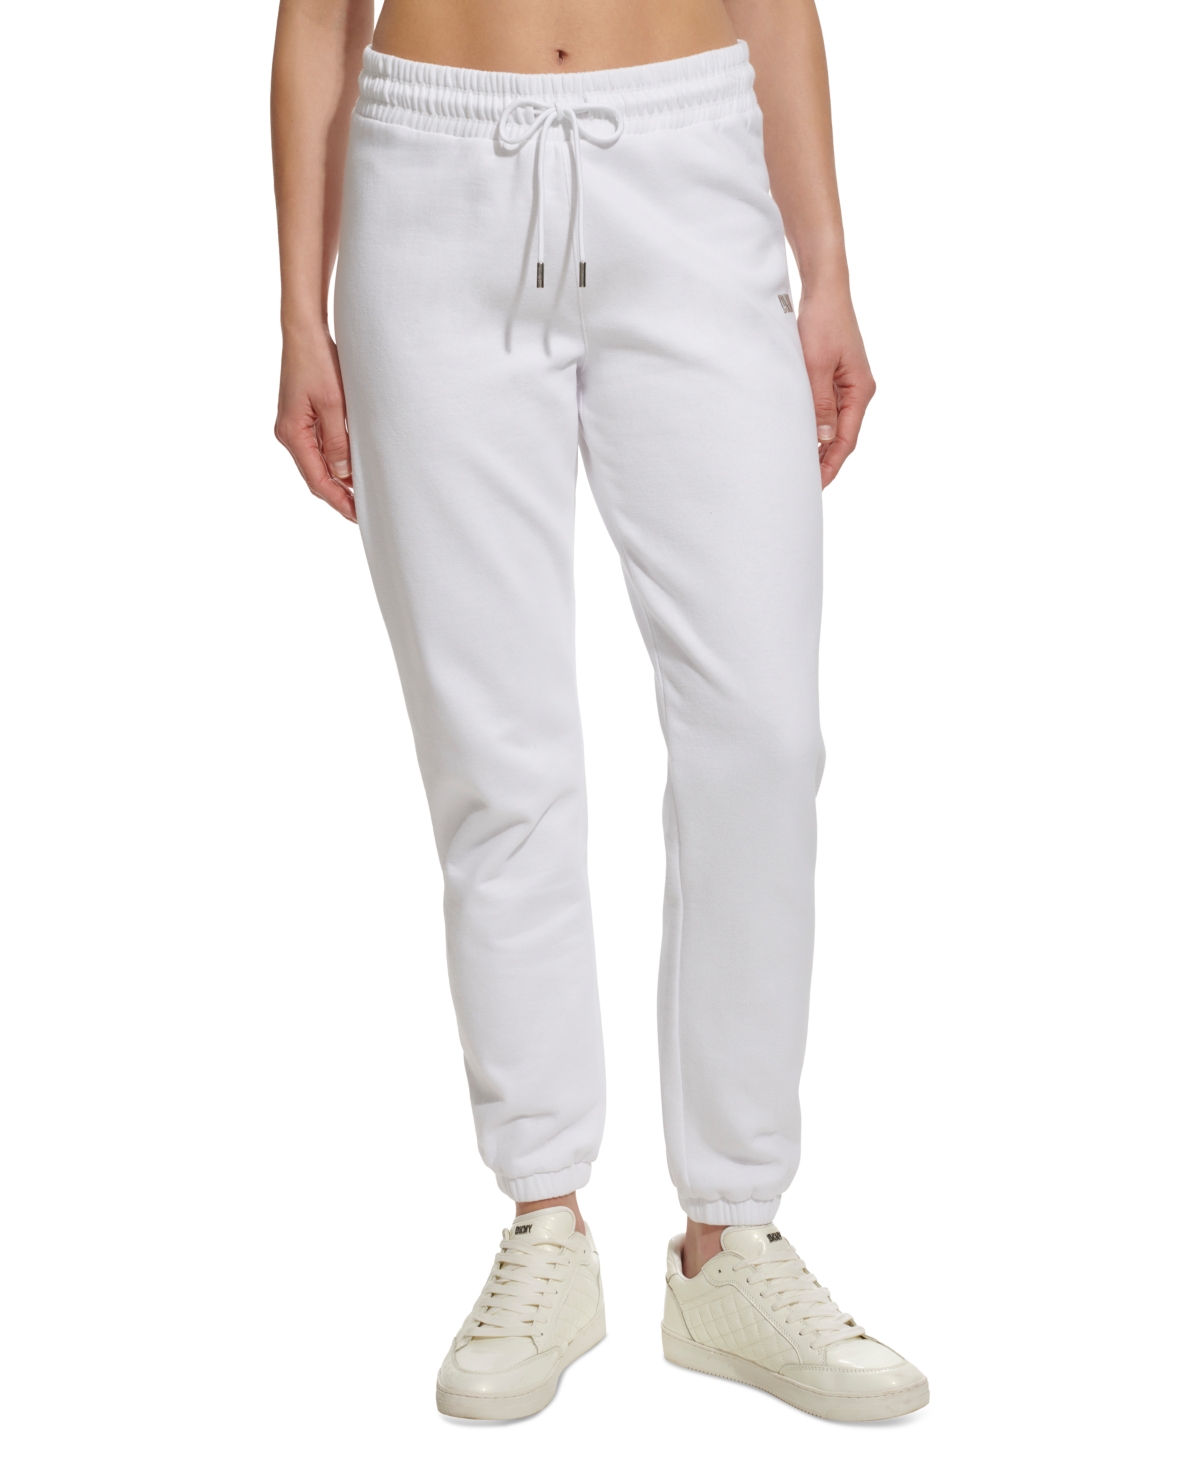 DKNY Pants in White